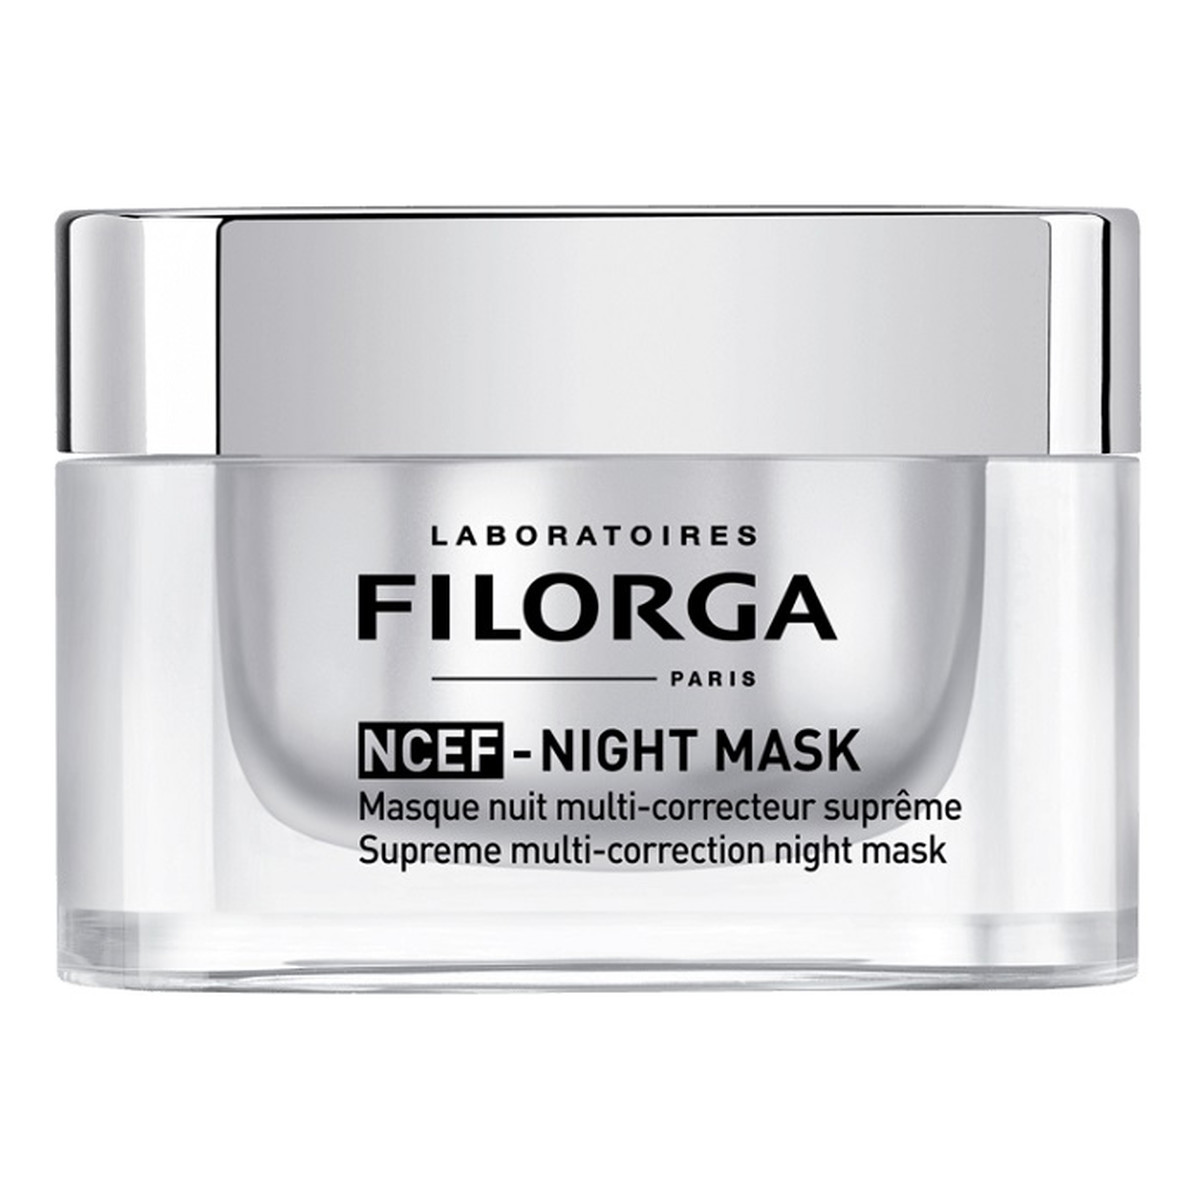 Filorga Ncef-night mask korygująca maska na noc 50ml